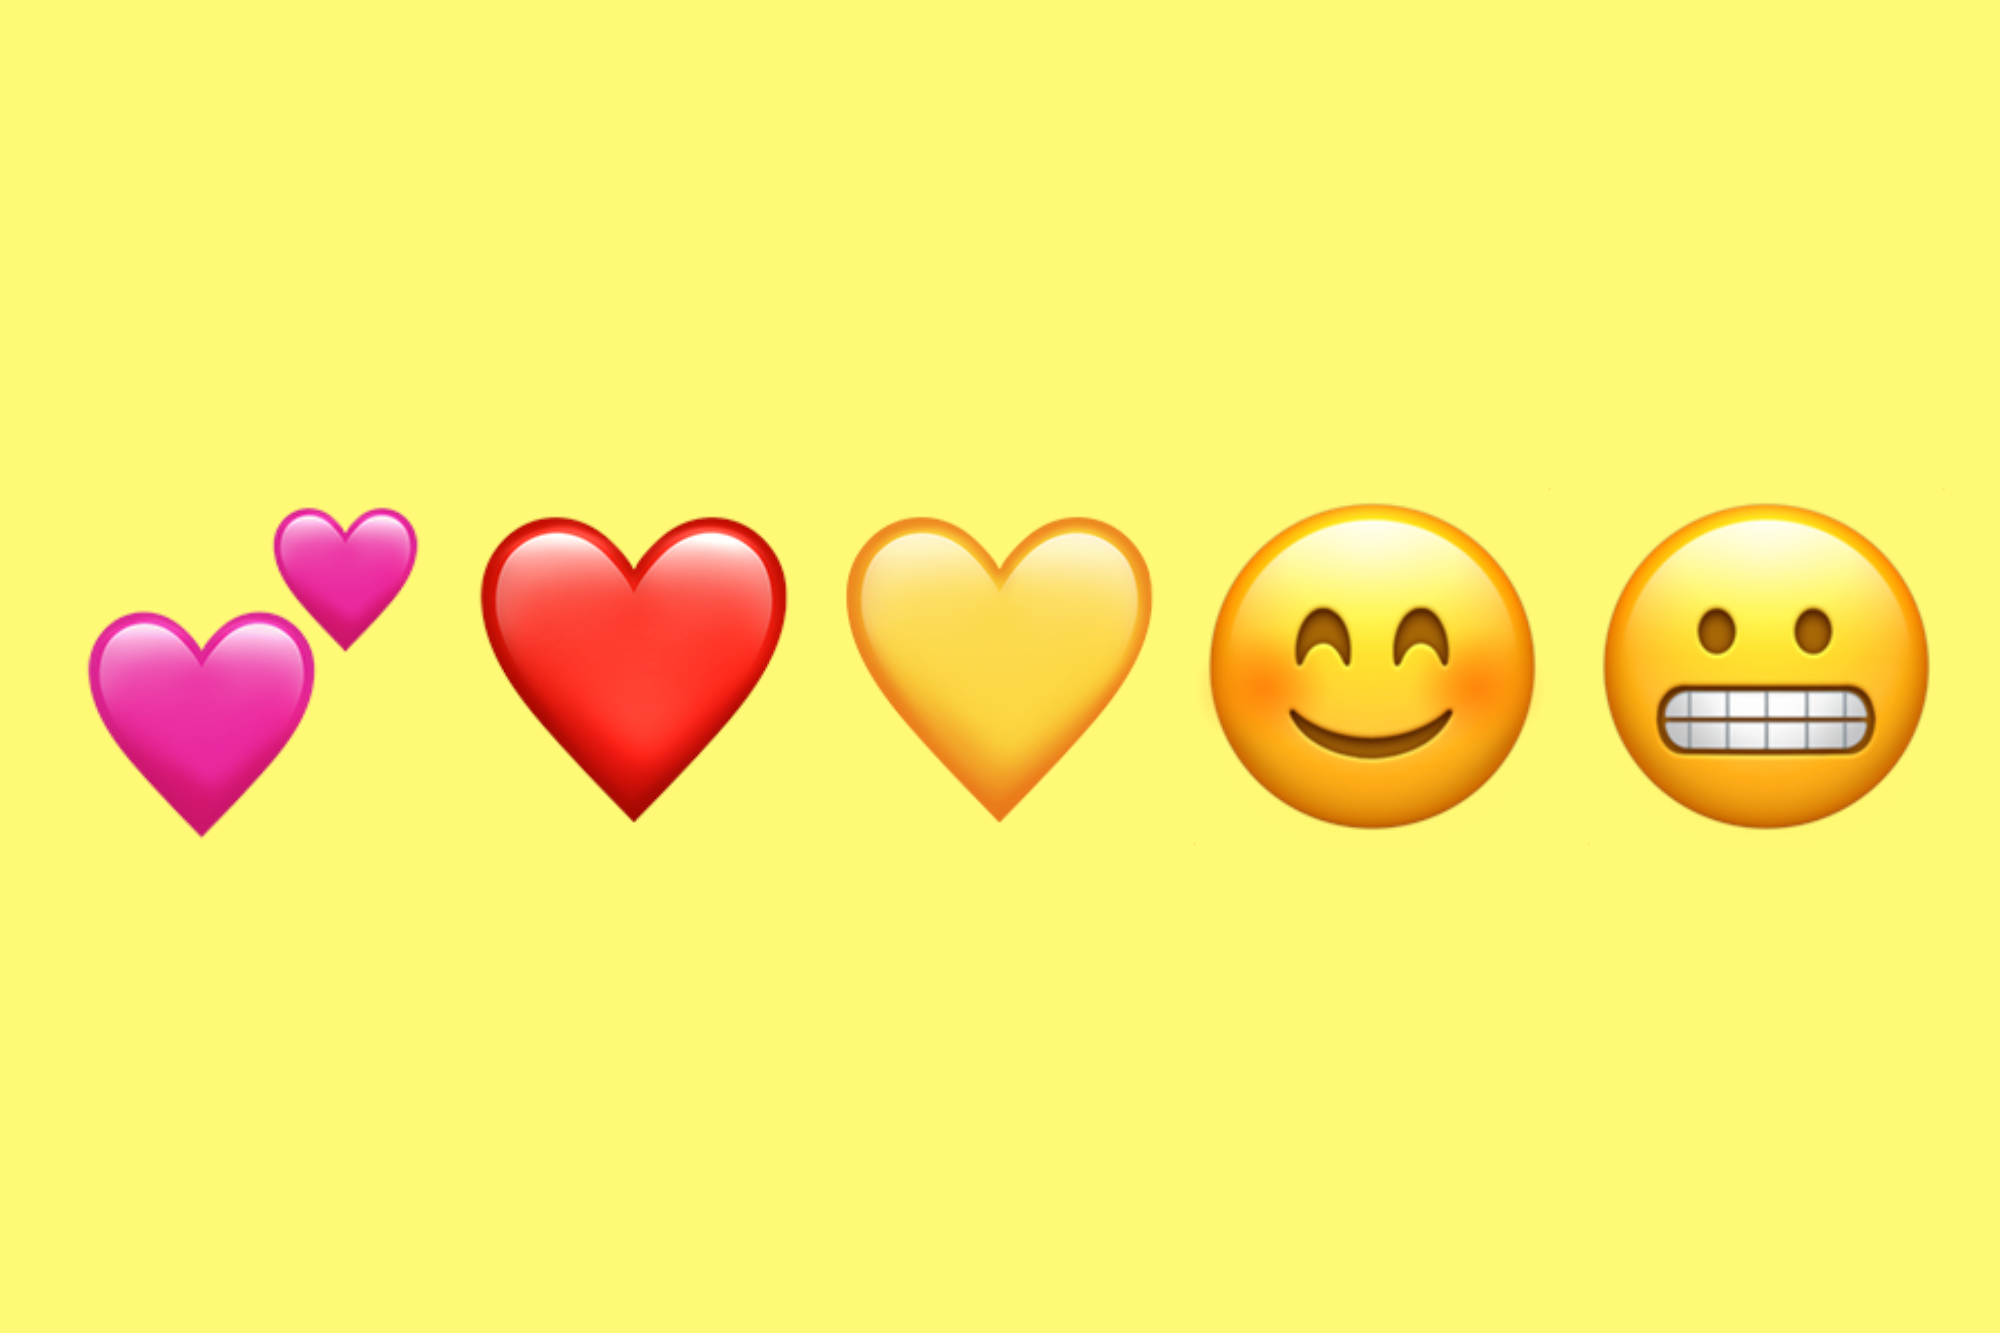 Pin on Emoji Meanings